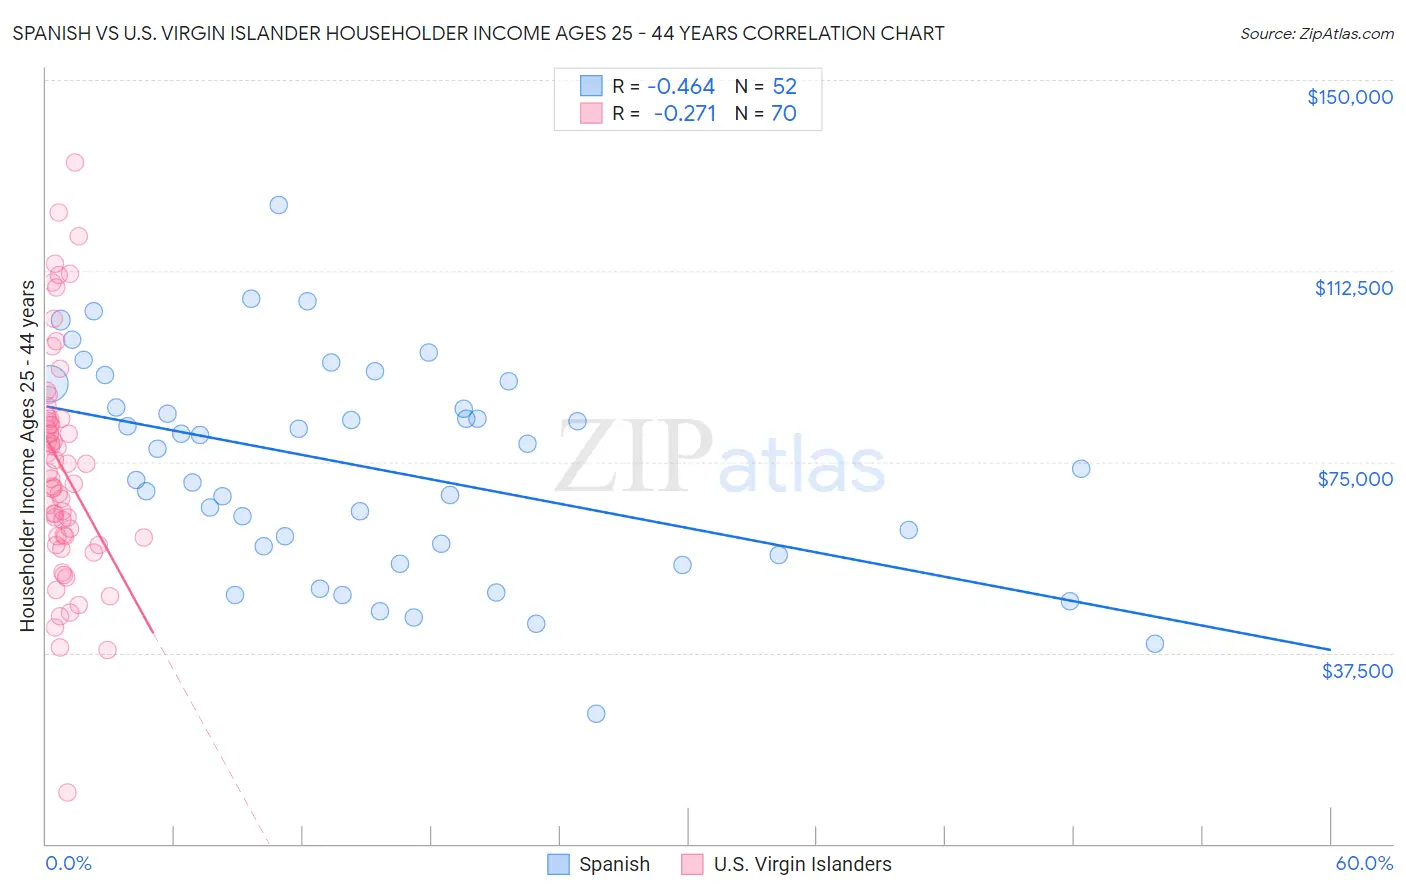 Spanish vs U.S. Virgin Islander Householder Income Ages 25 - 44 years